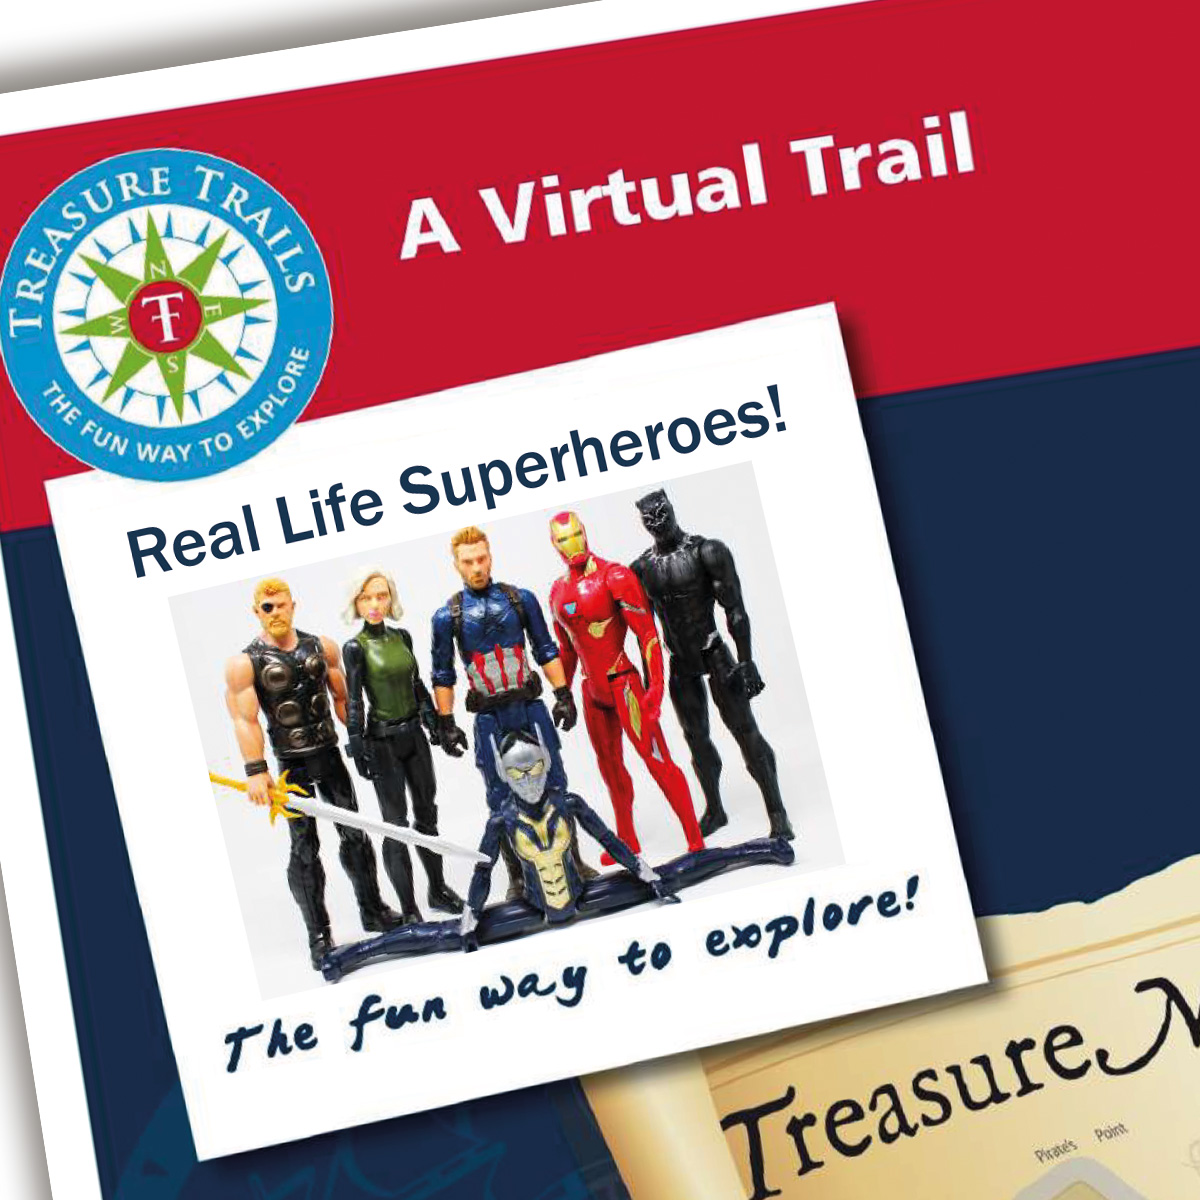 Real Life Superheroes Virtual Treasure Trail